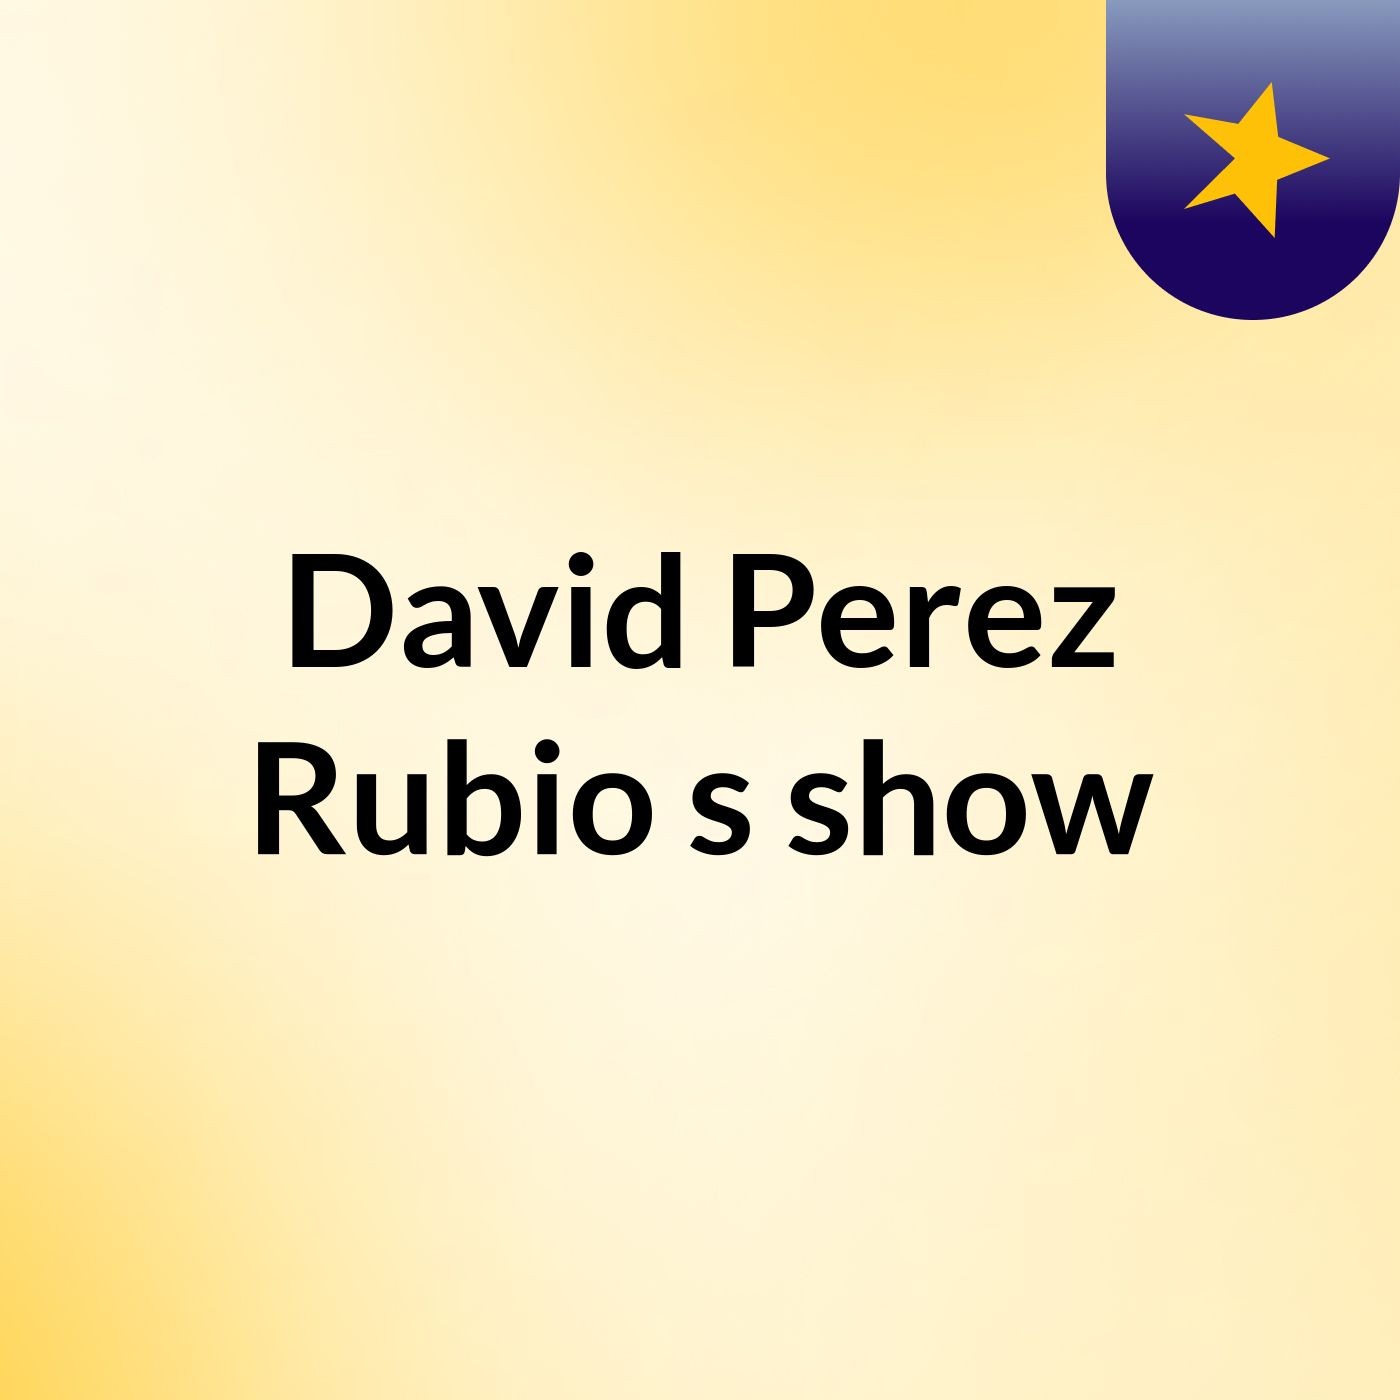 David Perez Rubio's show